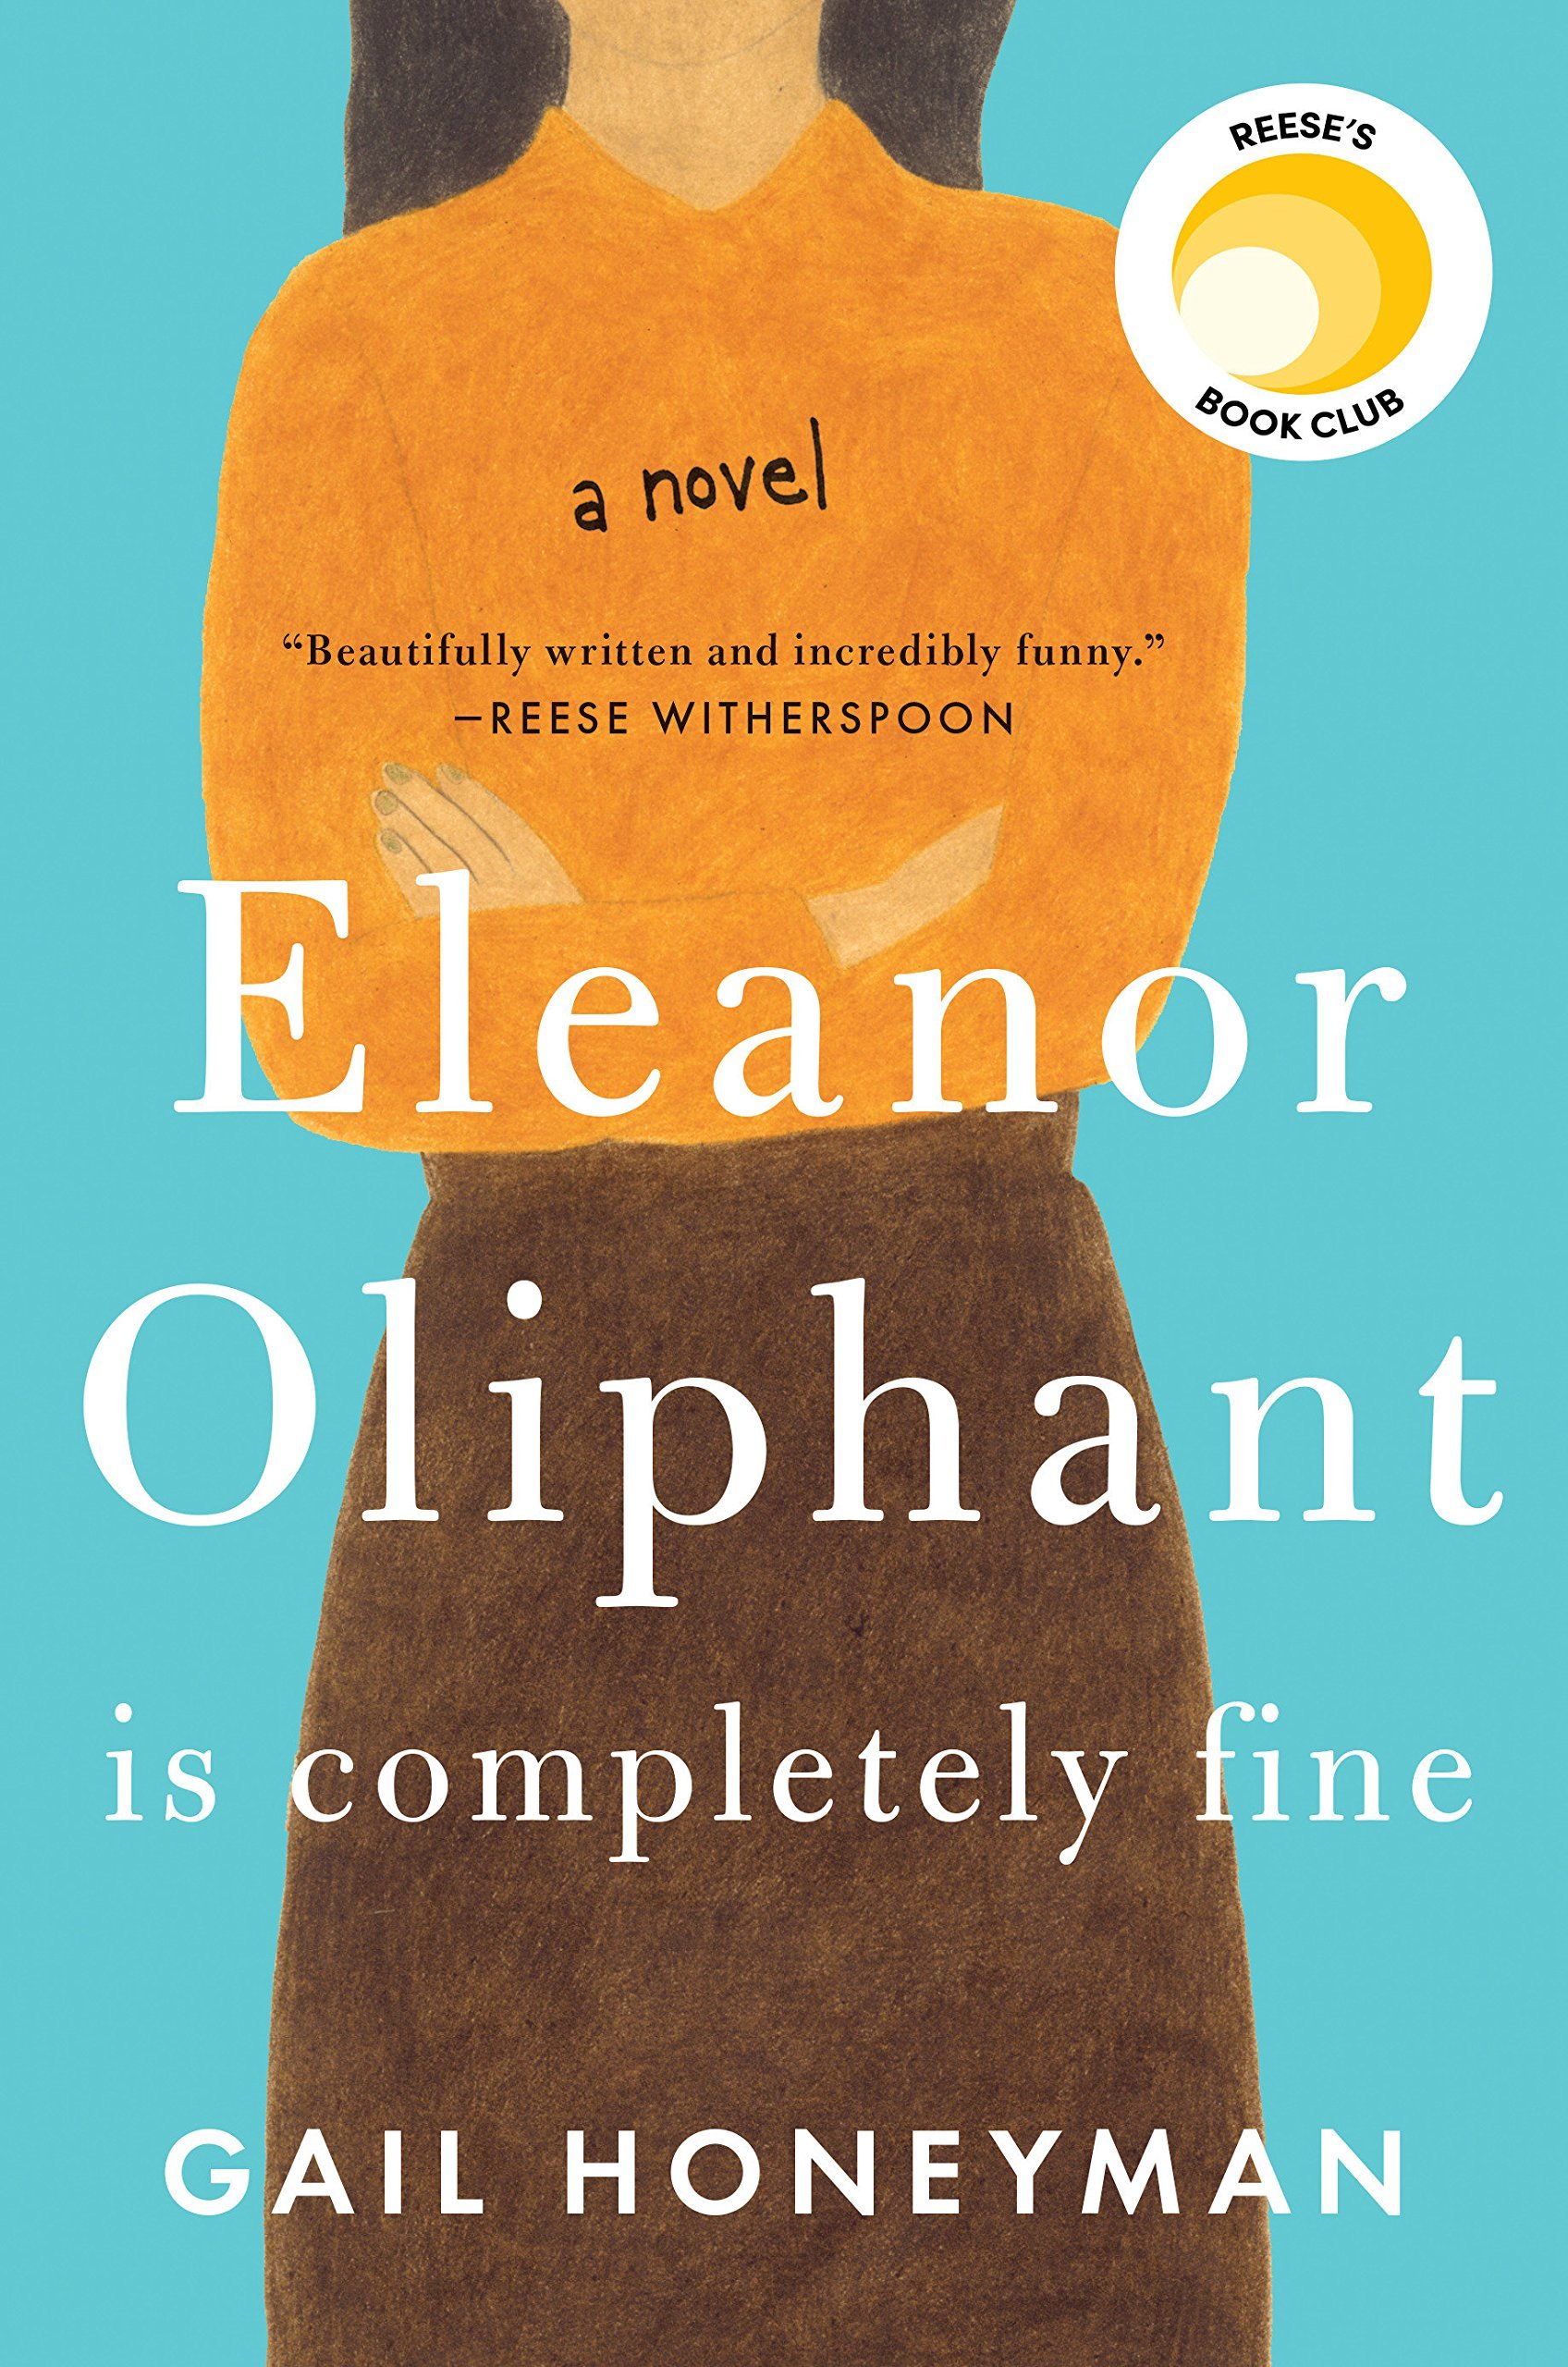 Eleanor Oliphant is Completely Fine by Gail Honeyman.jpg